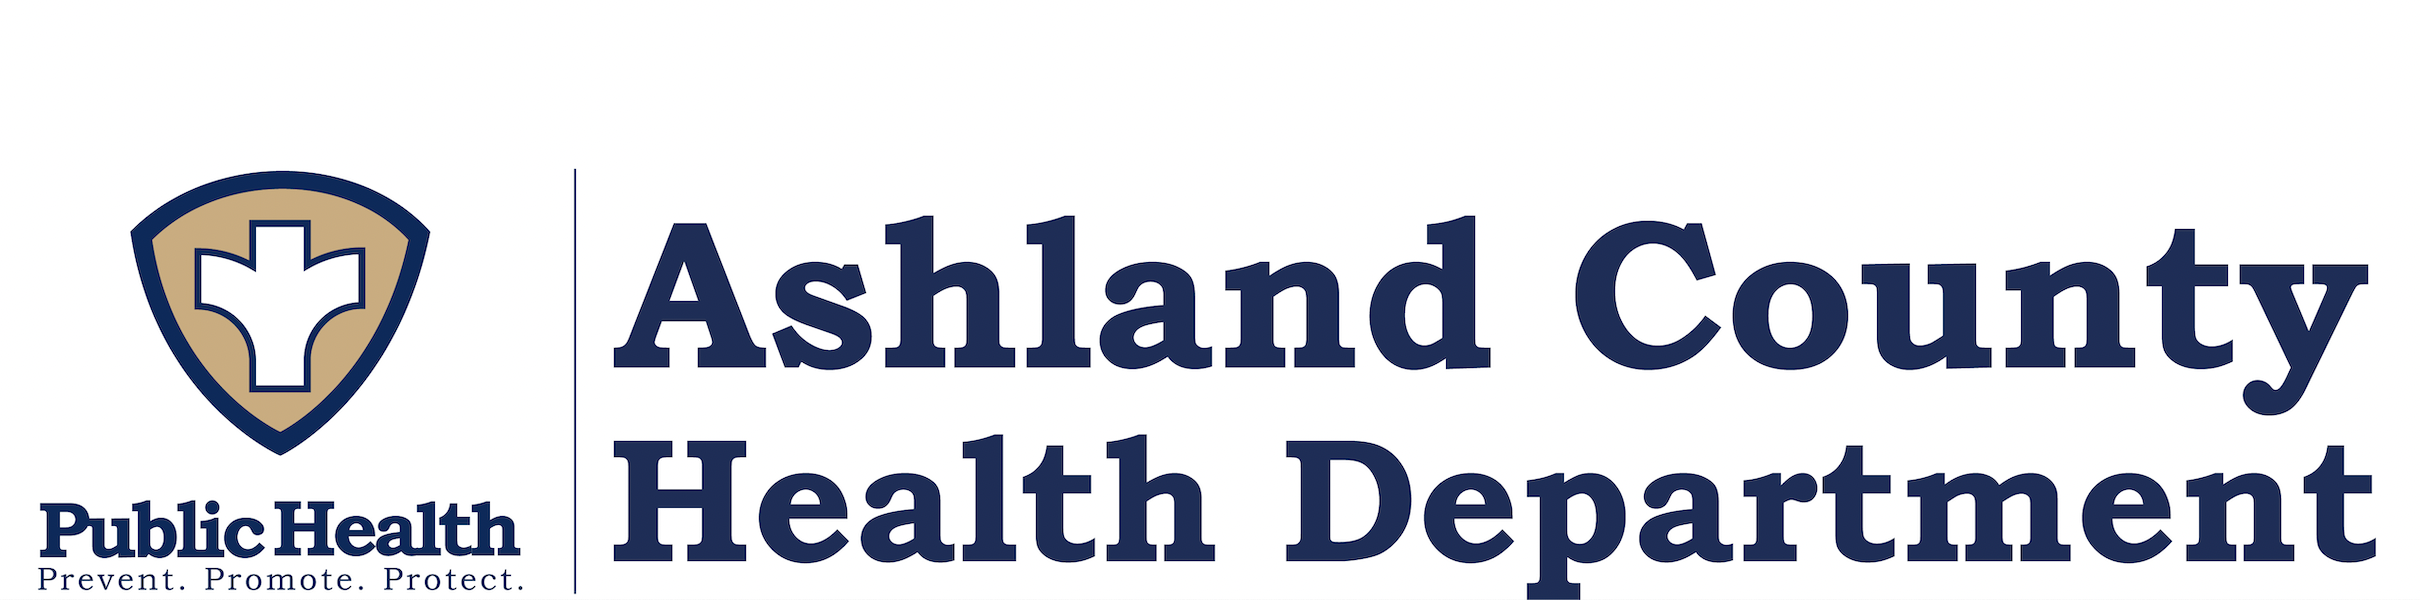 Ashland County Health Department